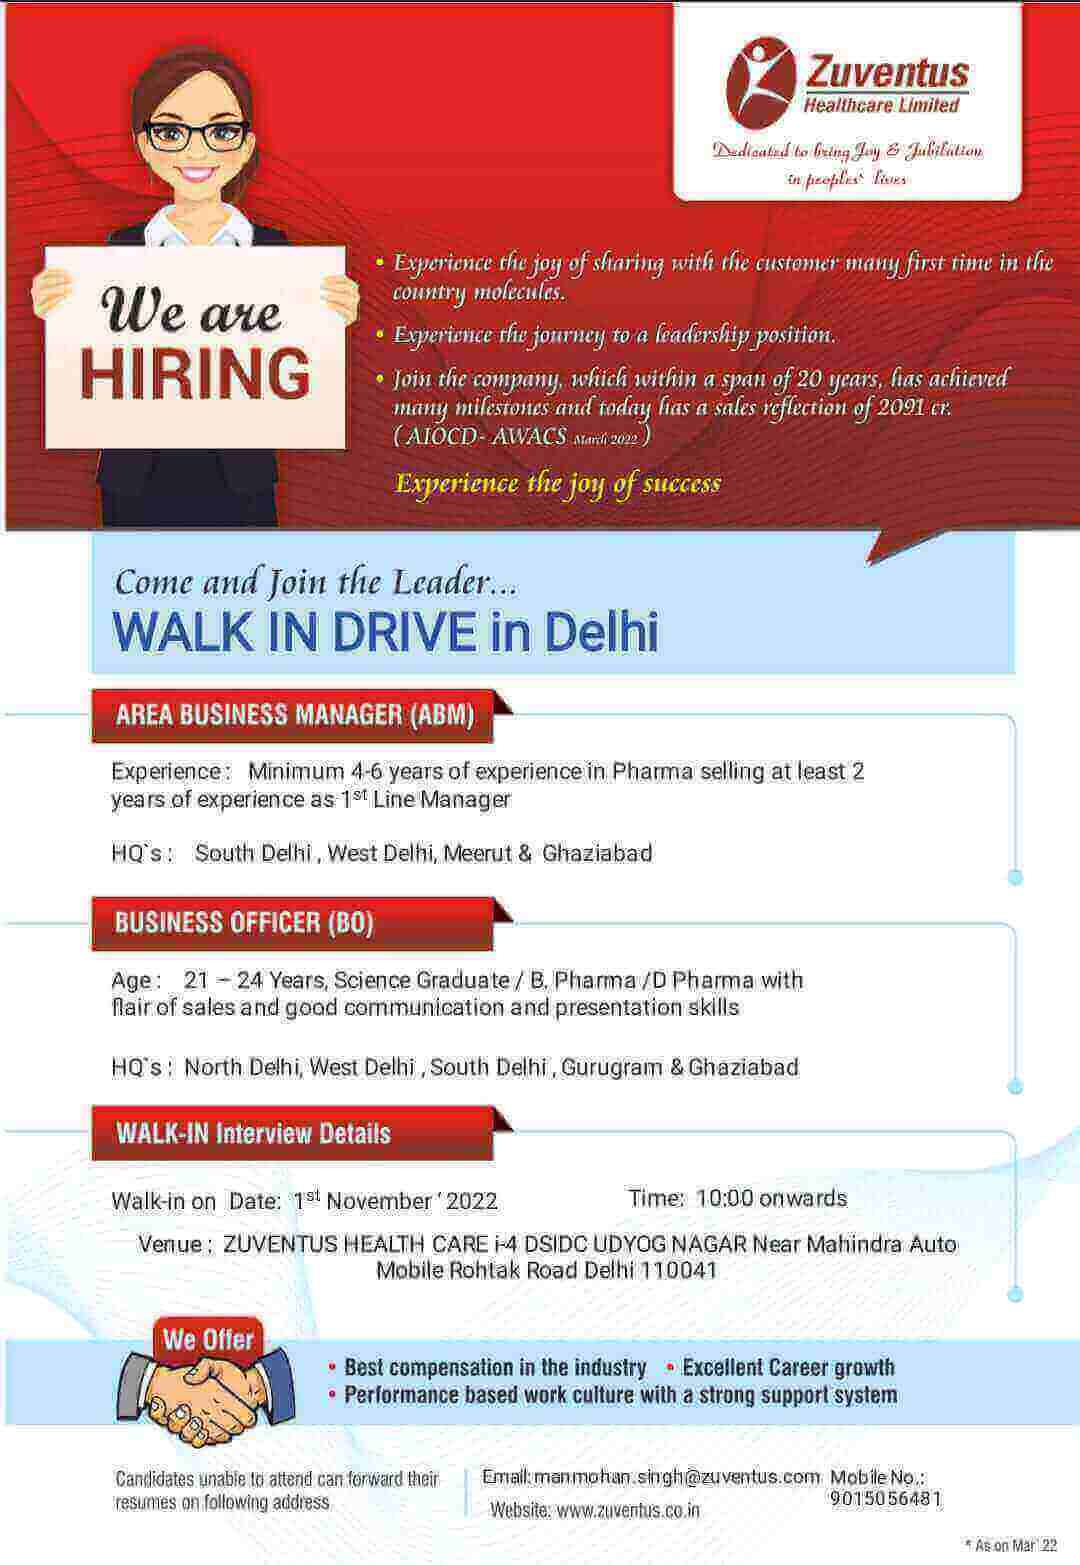 Zuventus Healthcare Jobs at Delhi